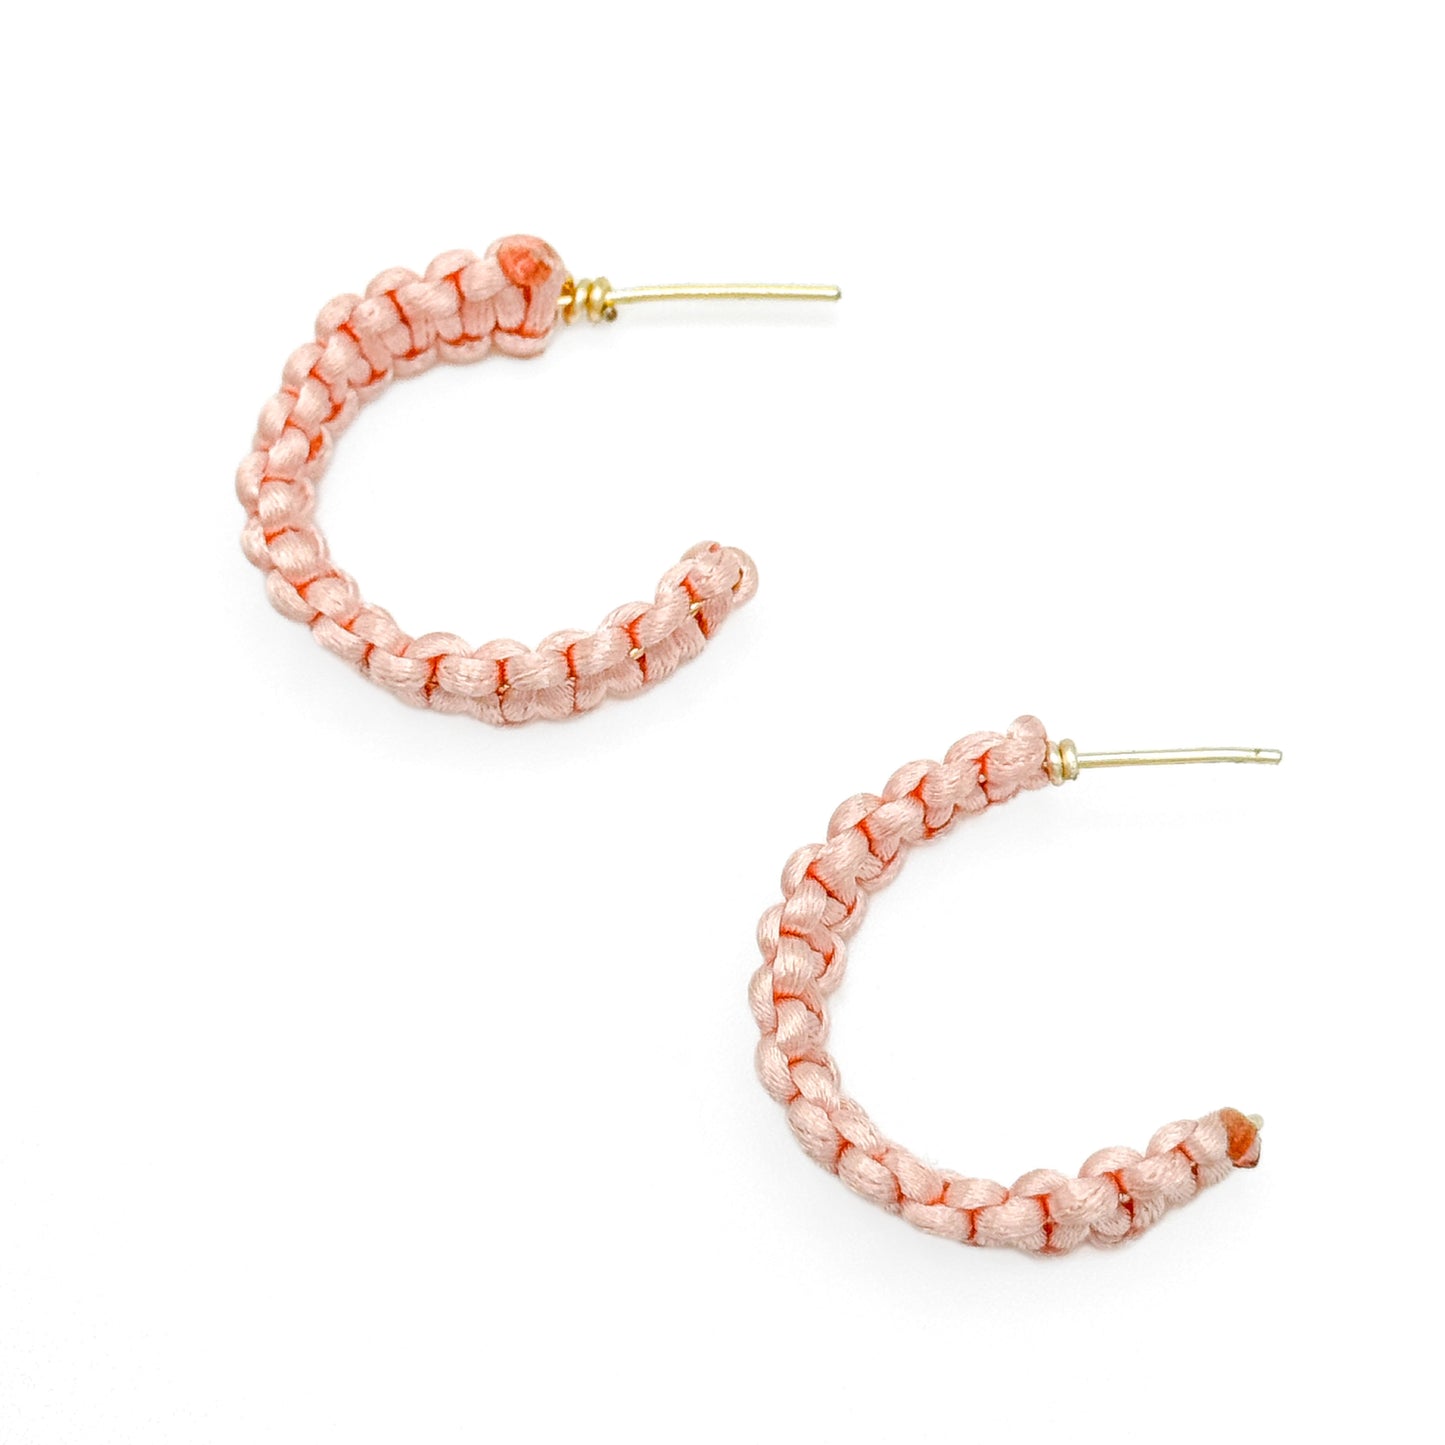 Peach Blossom earrings